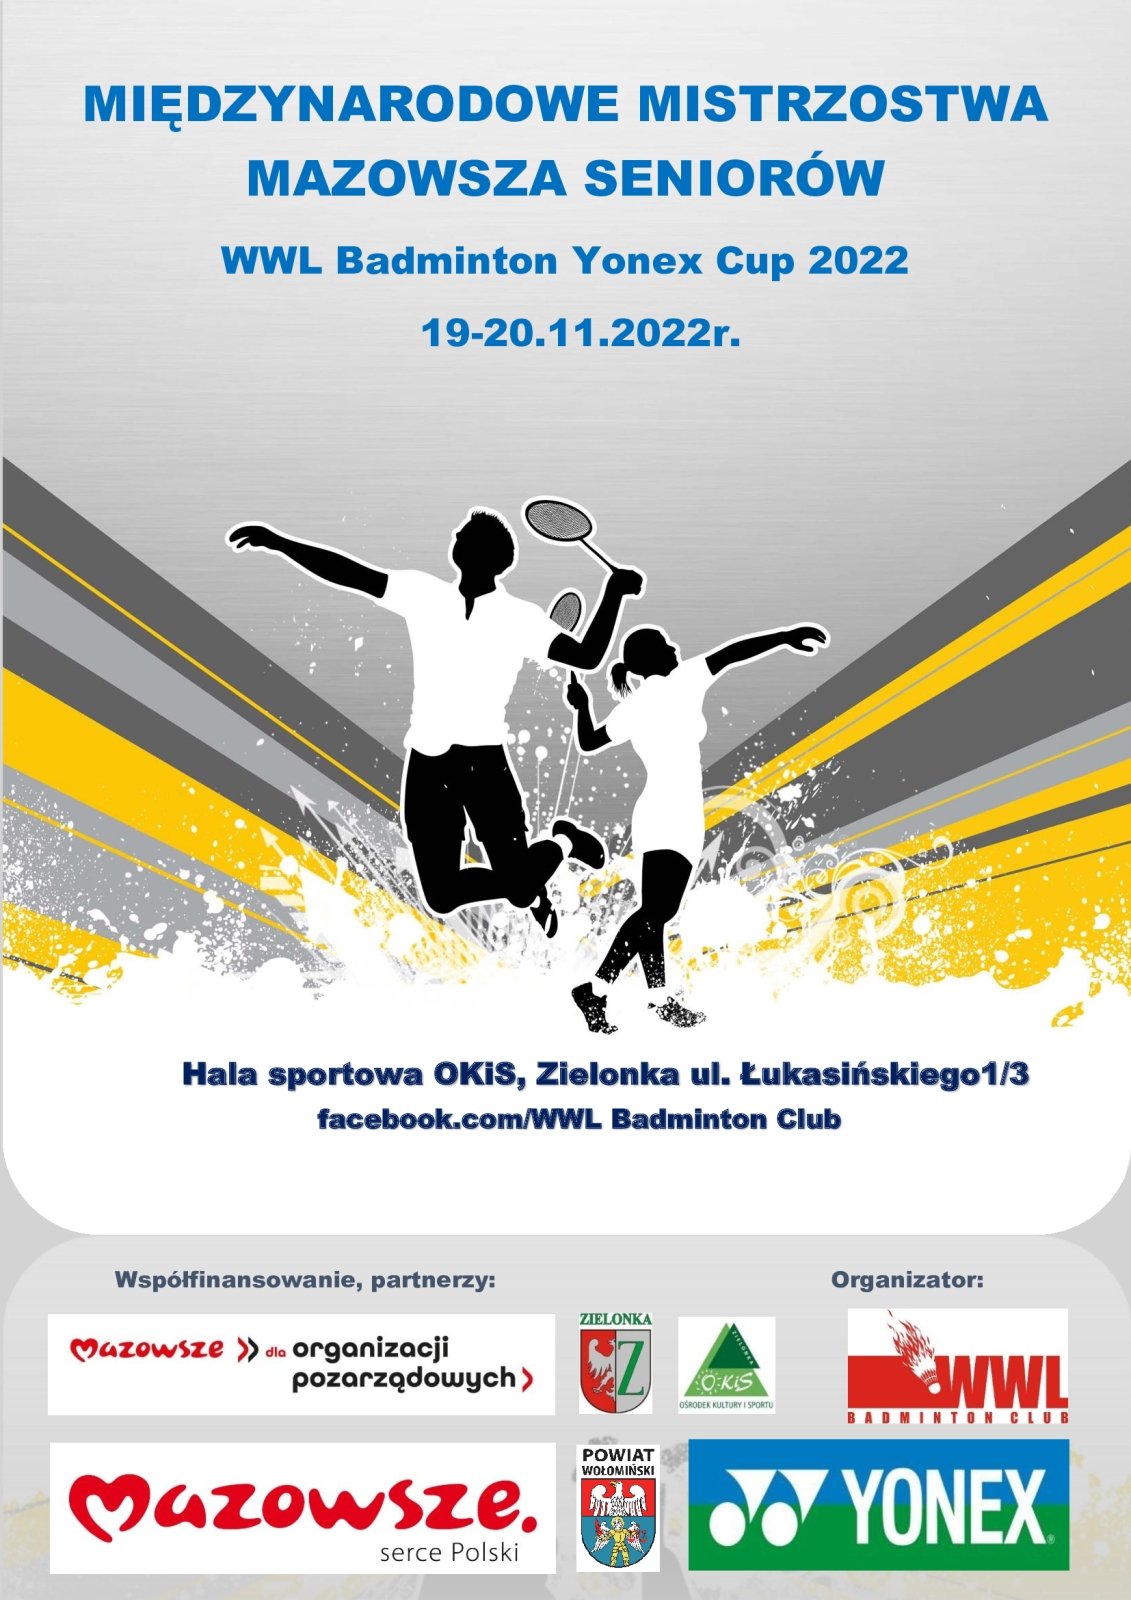  WWL Badminton Yonex Cup 2022